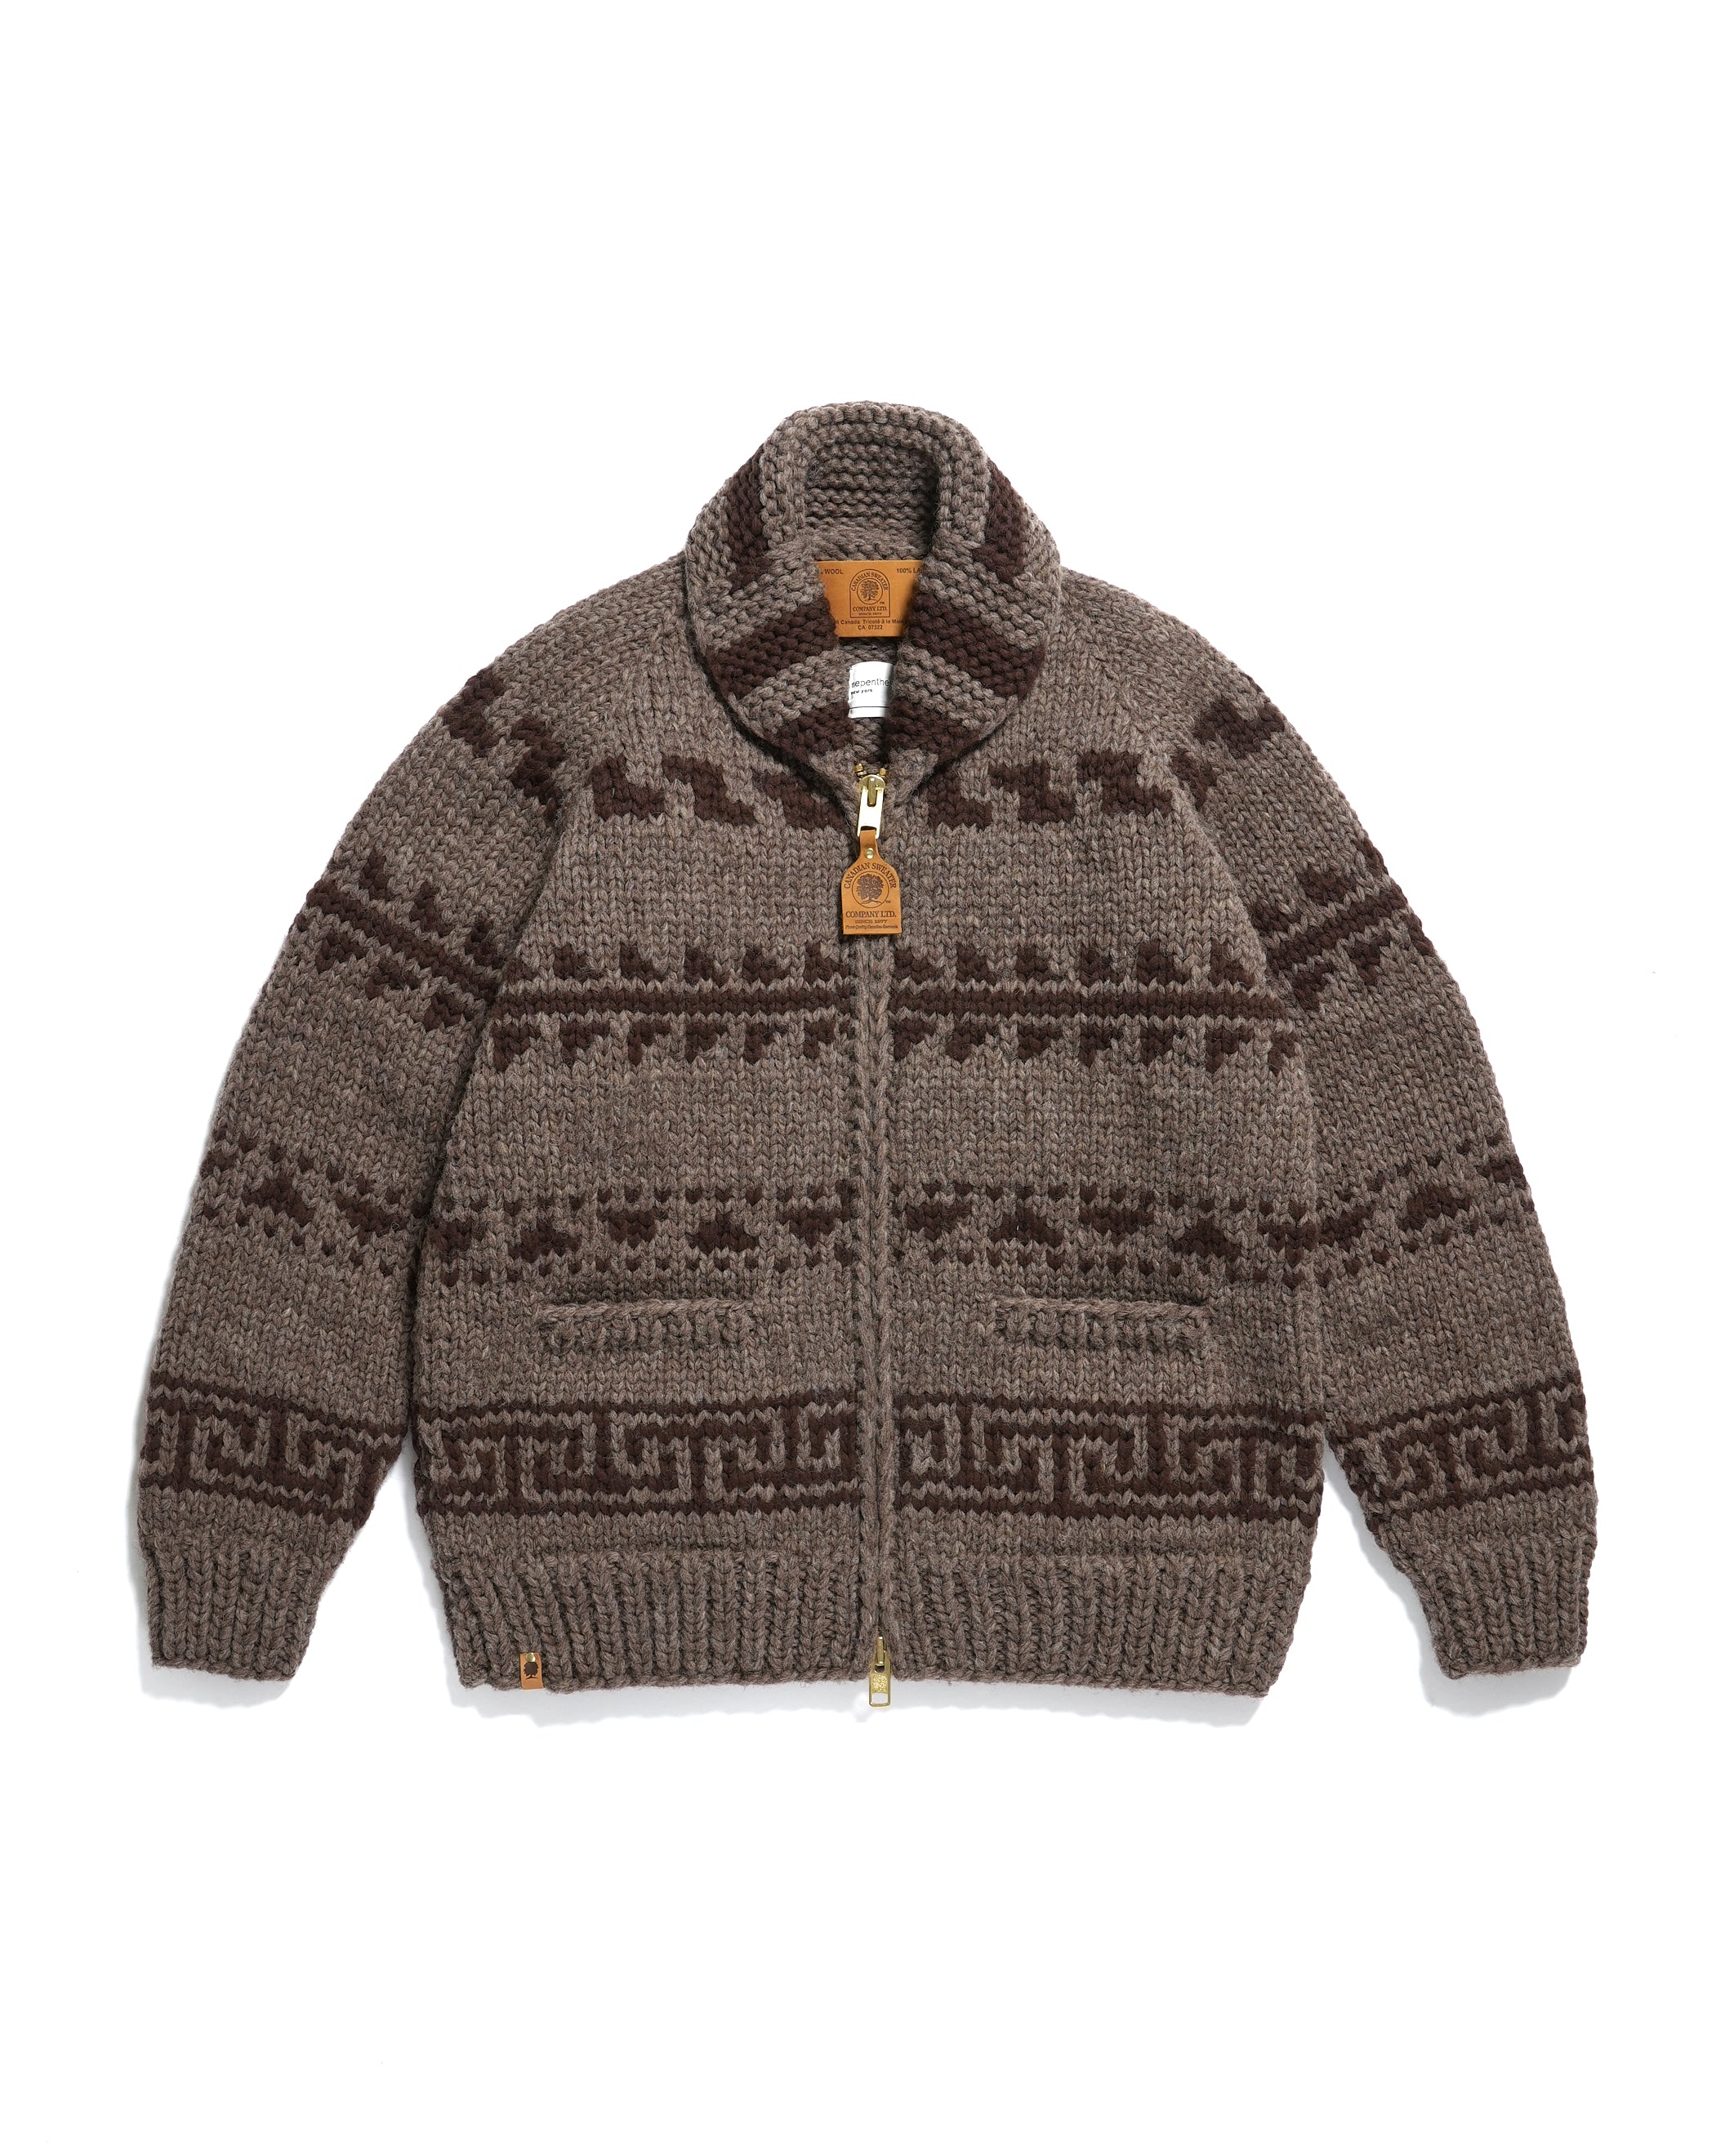 Cowichan Sweater - Beige/Brown